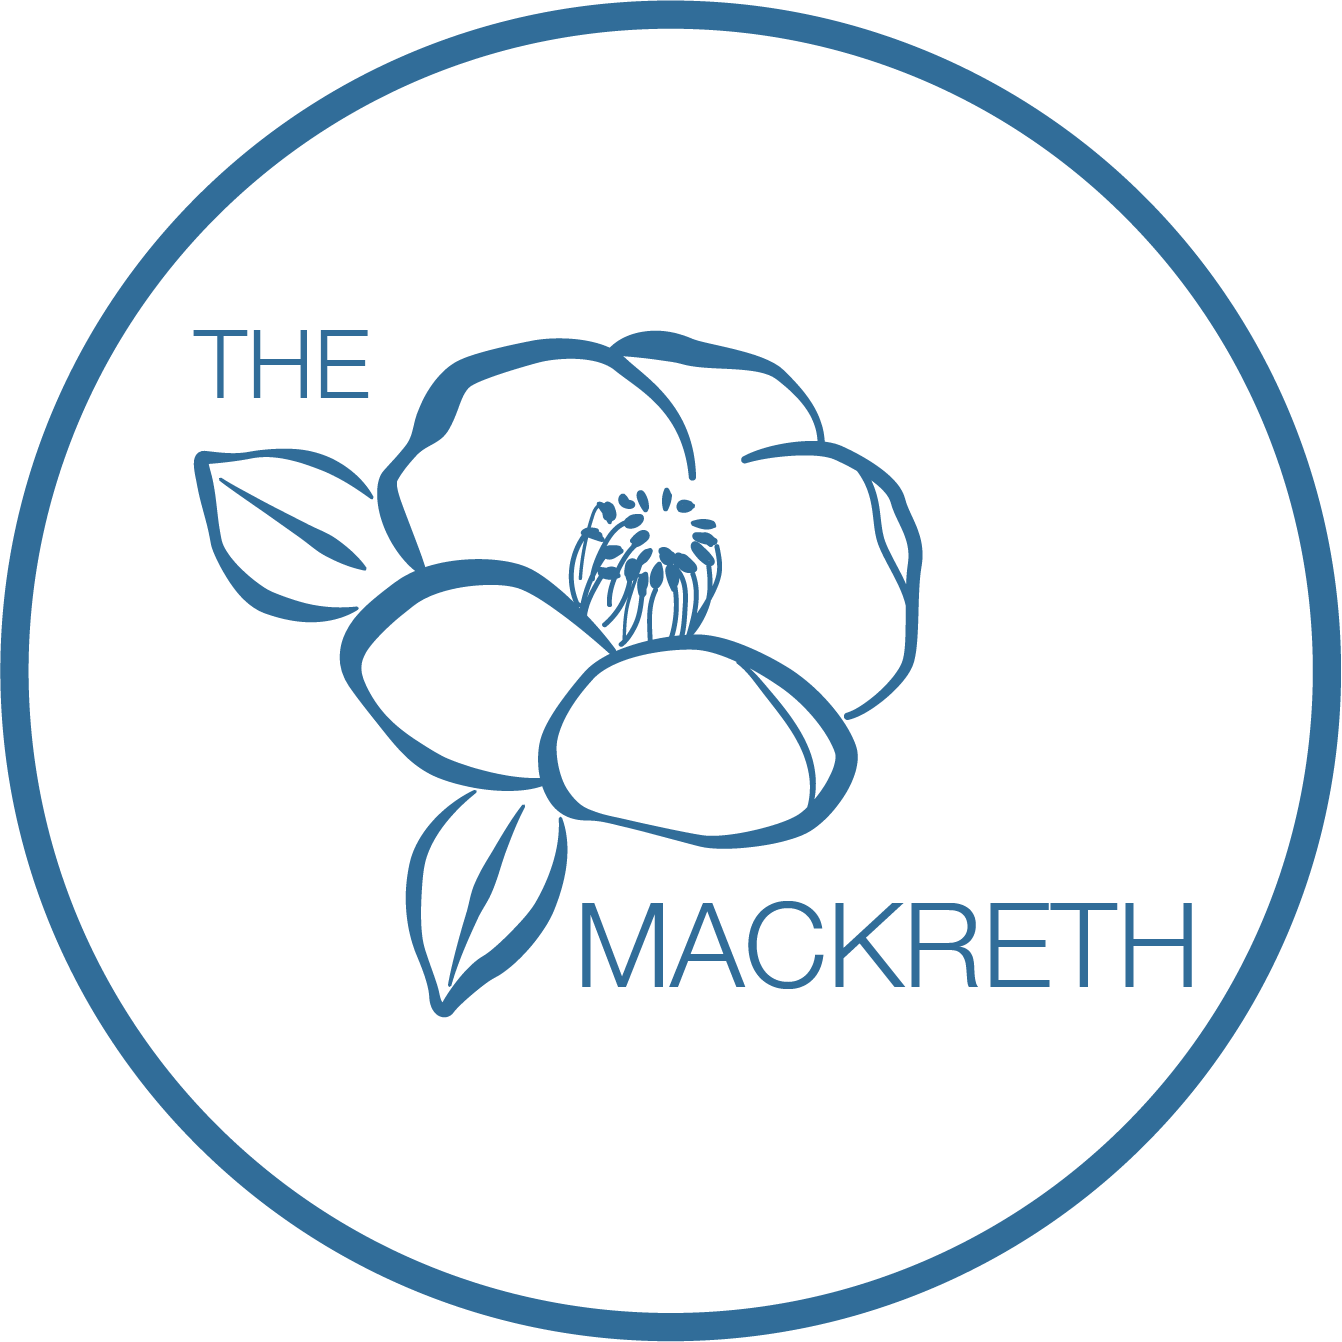 The Mackreth